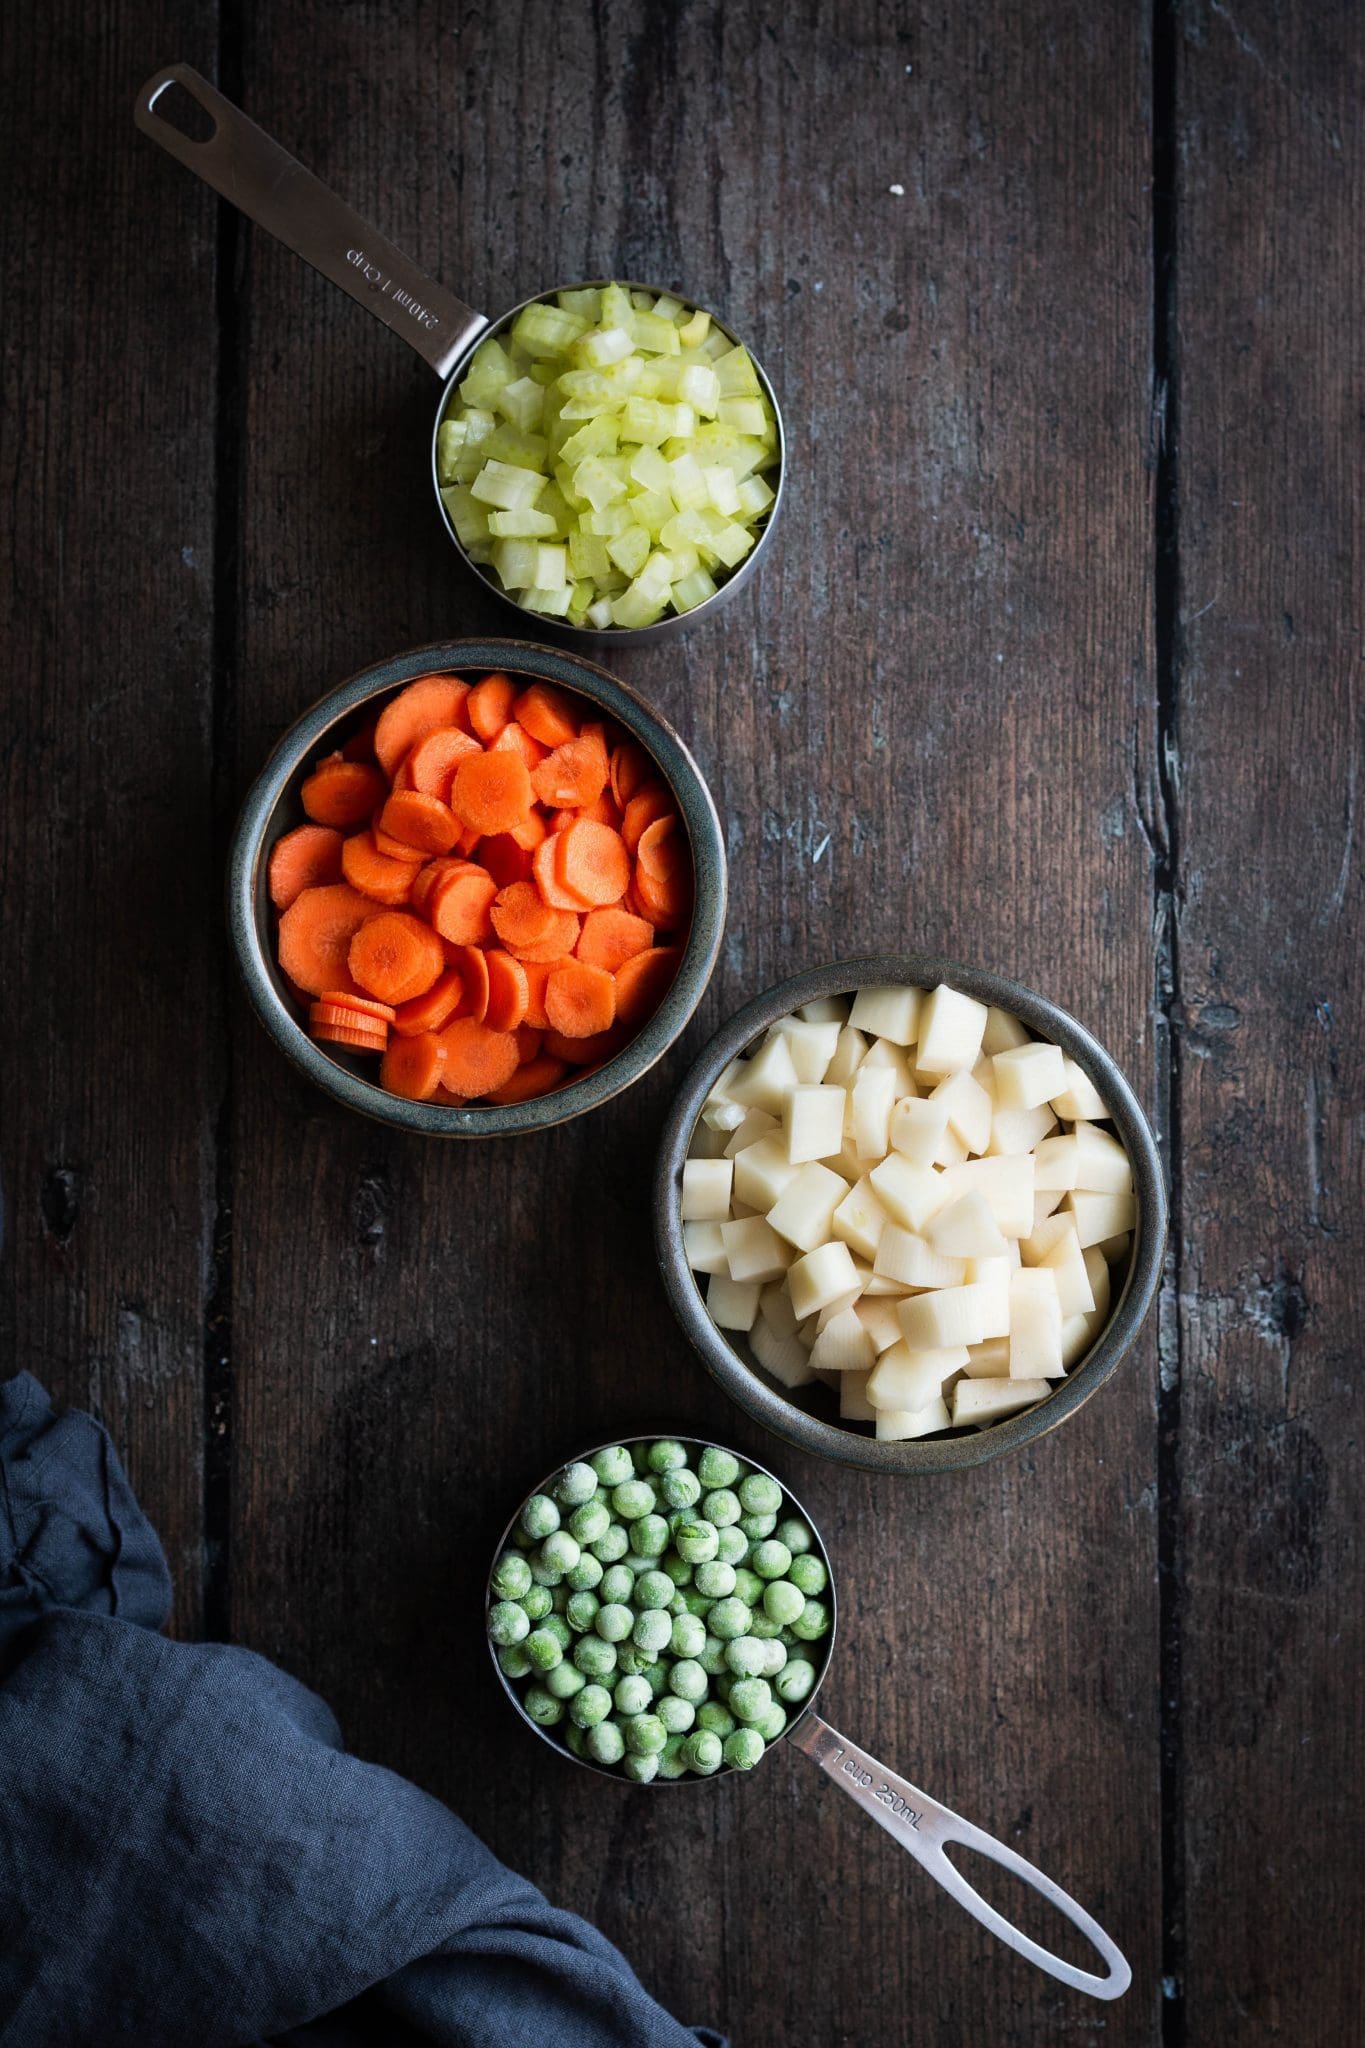 peas, carrots, celery and potatoes